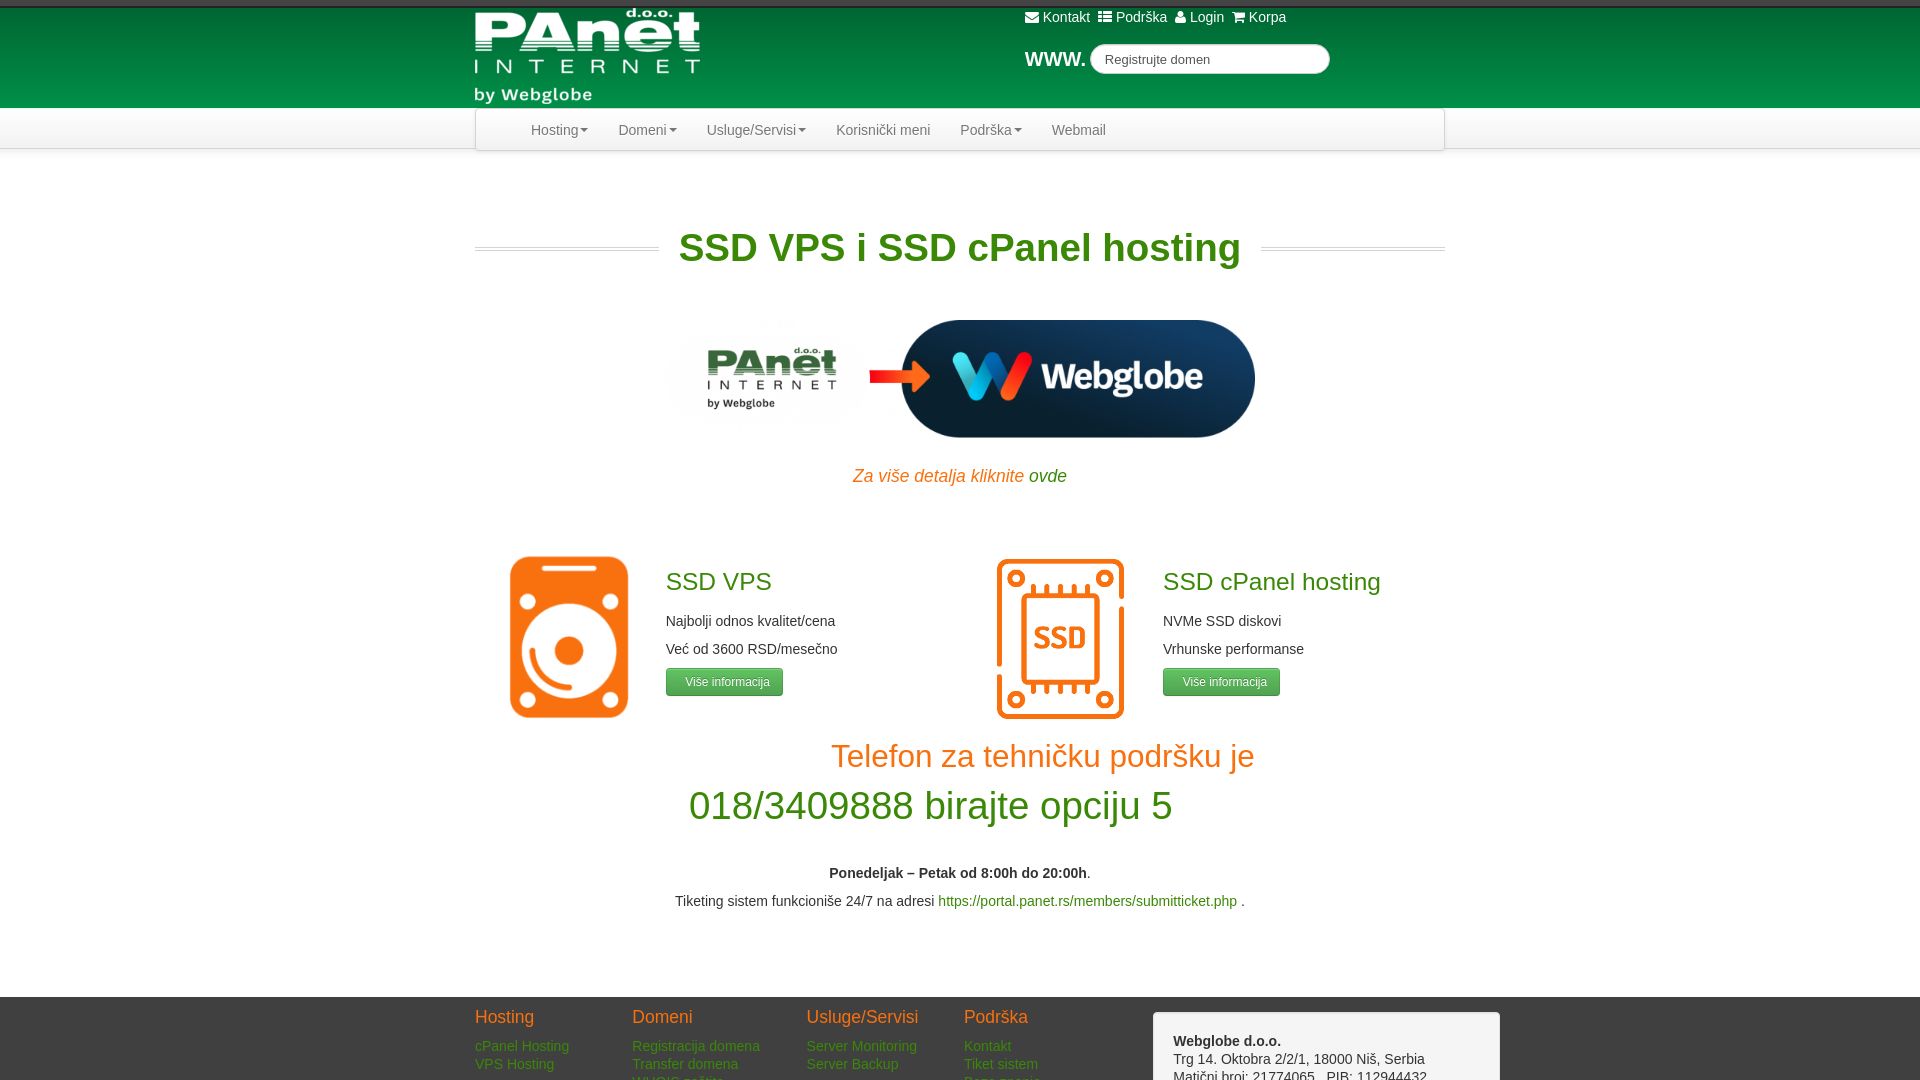 Website status panet.rs is   ONLINE